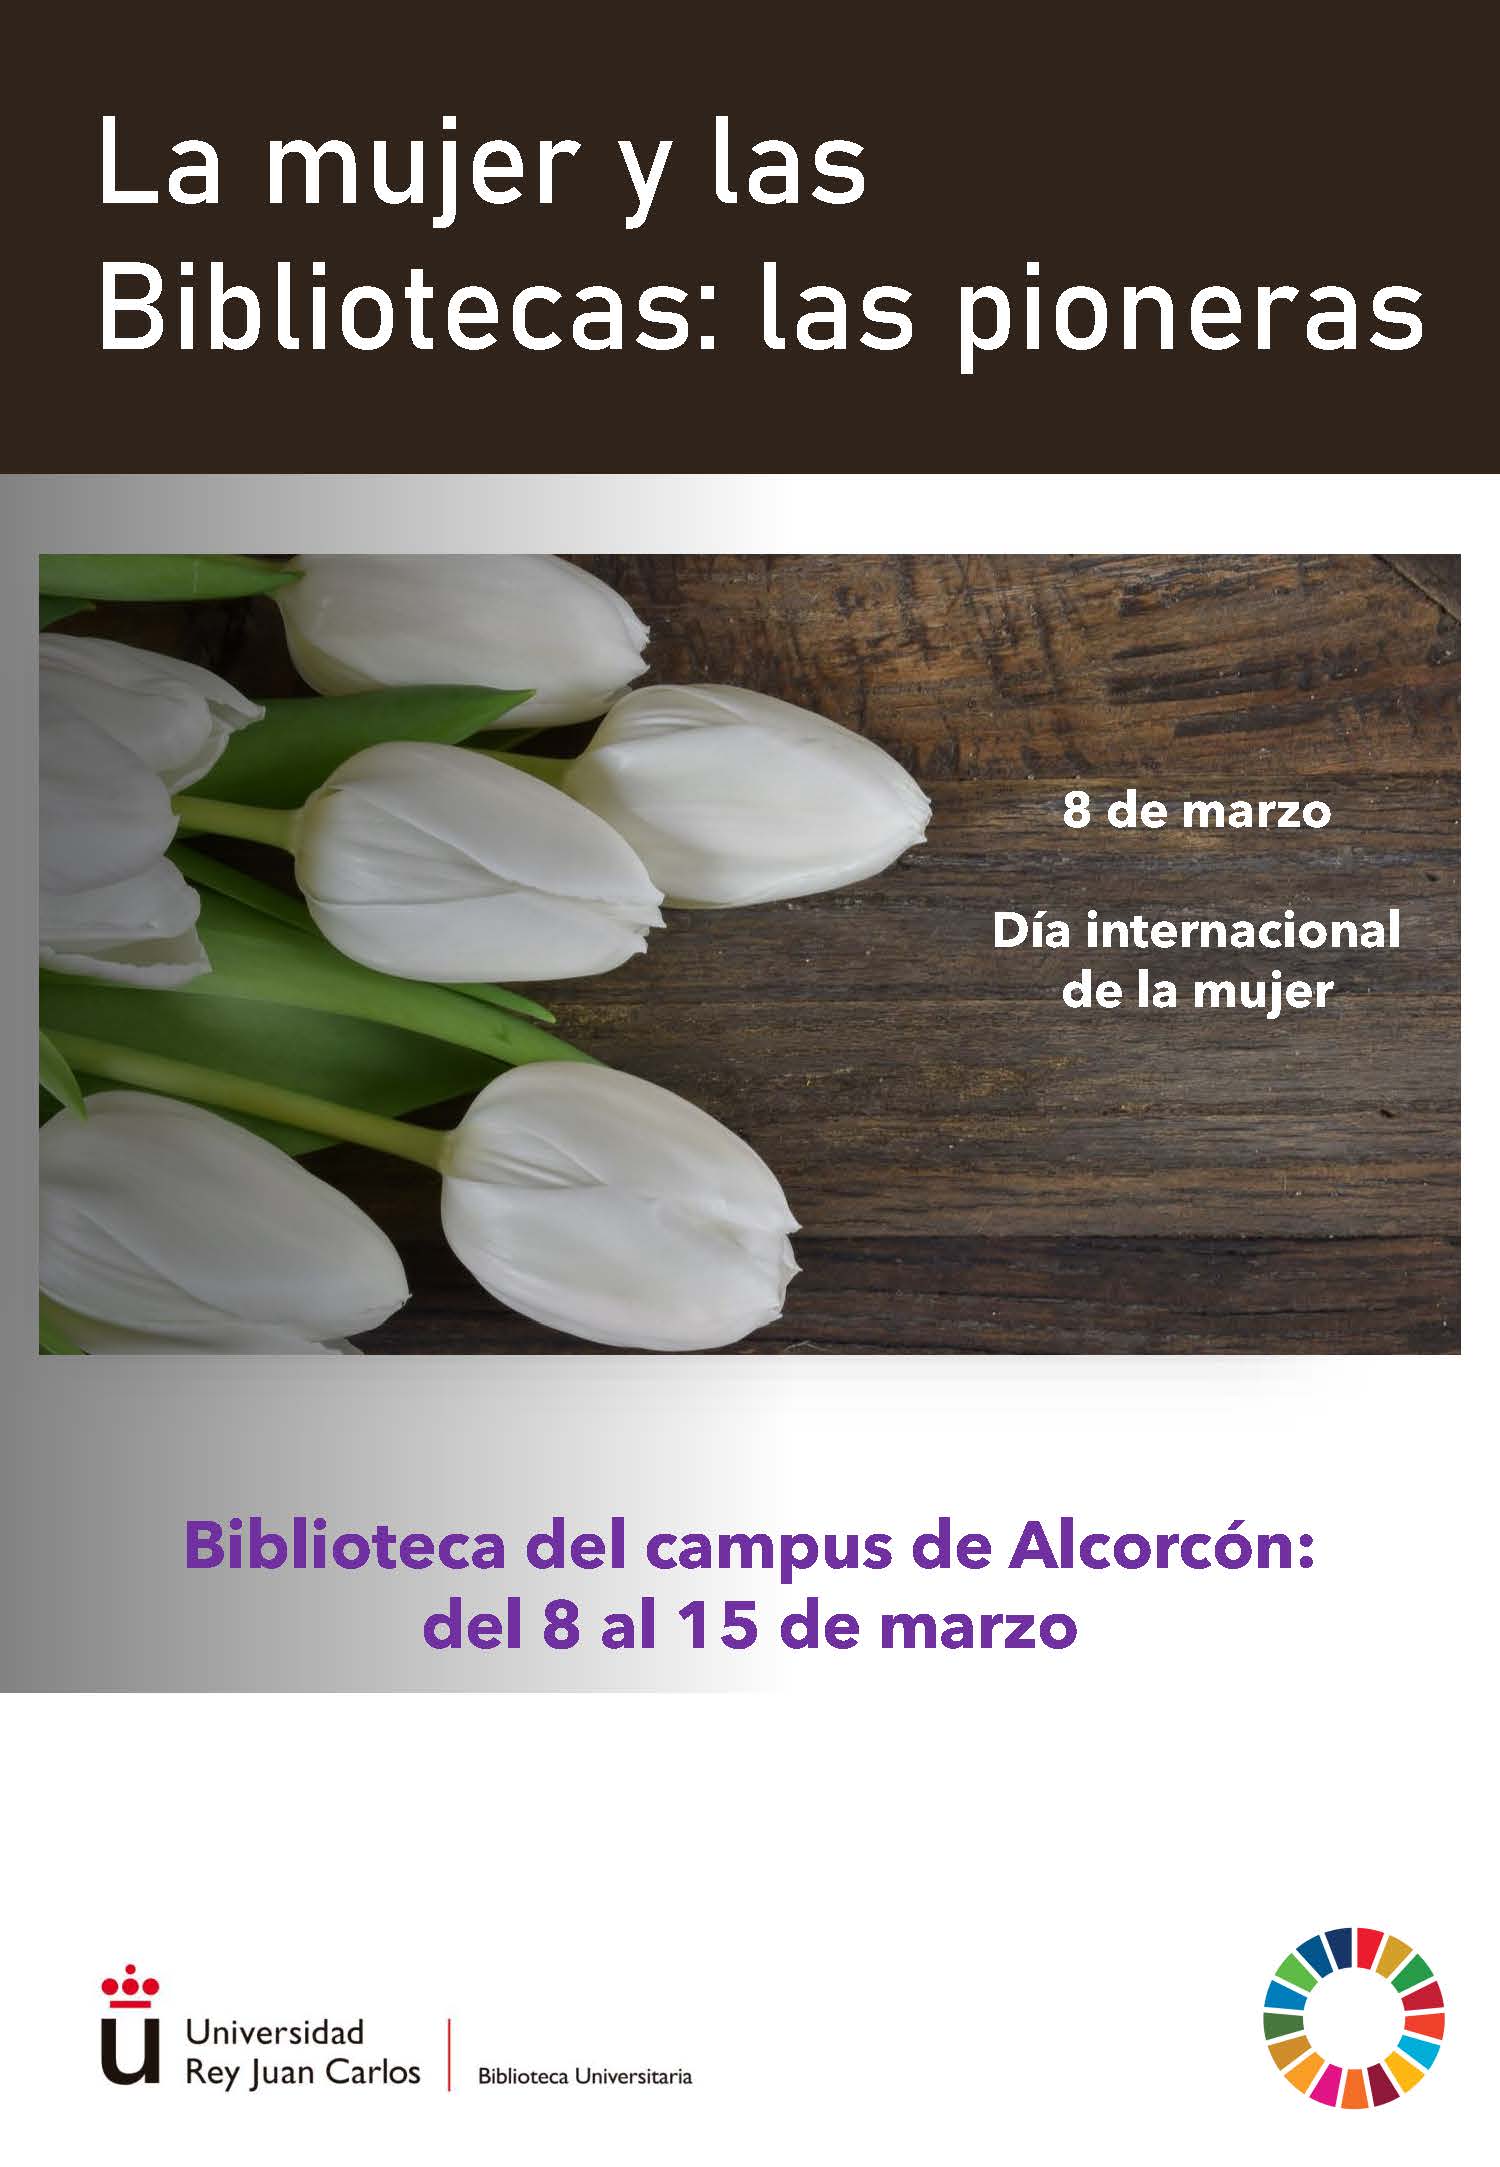 March 8 Alcorcón